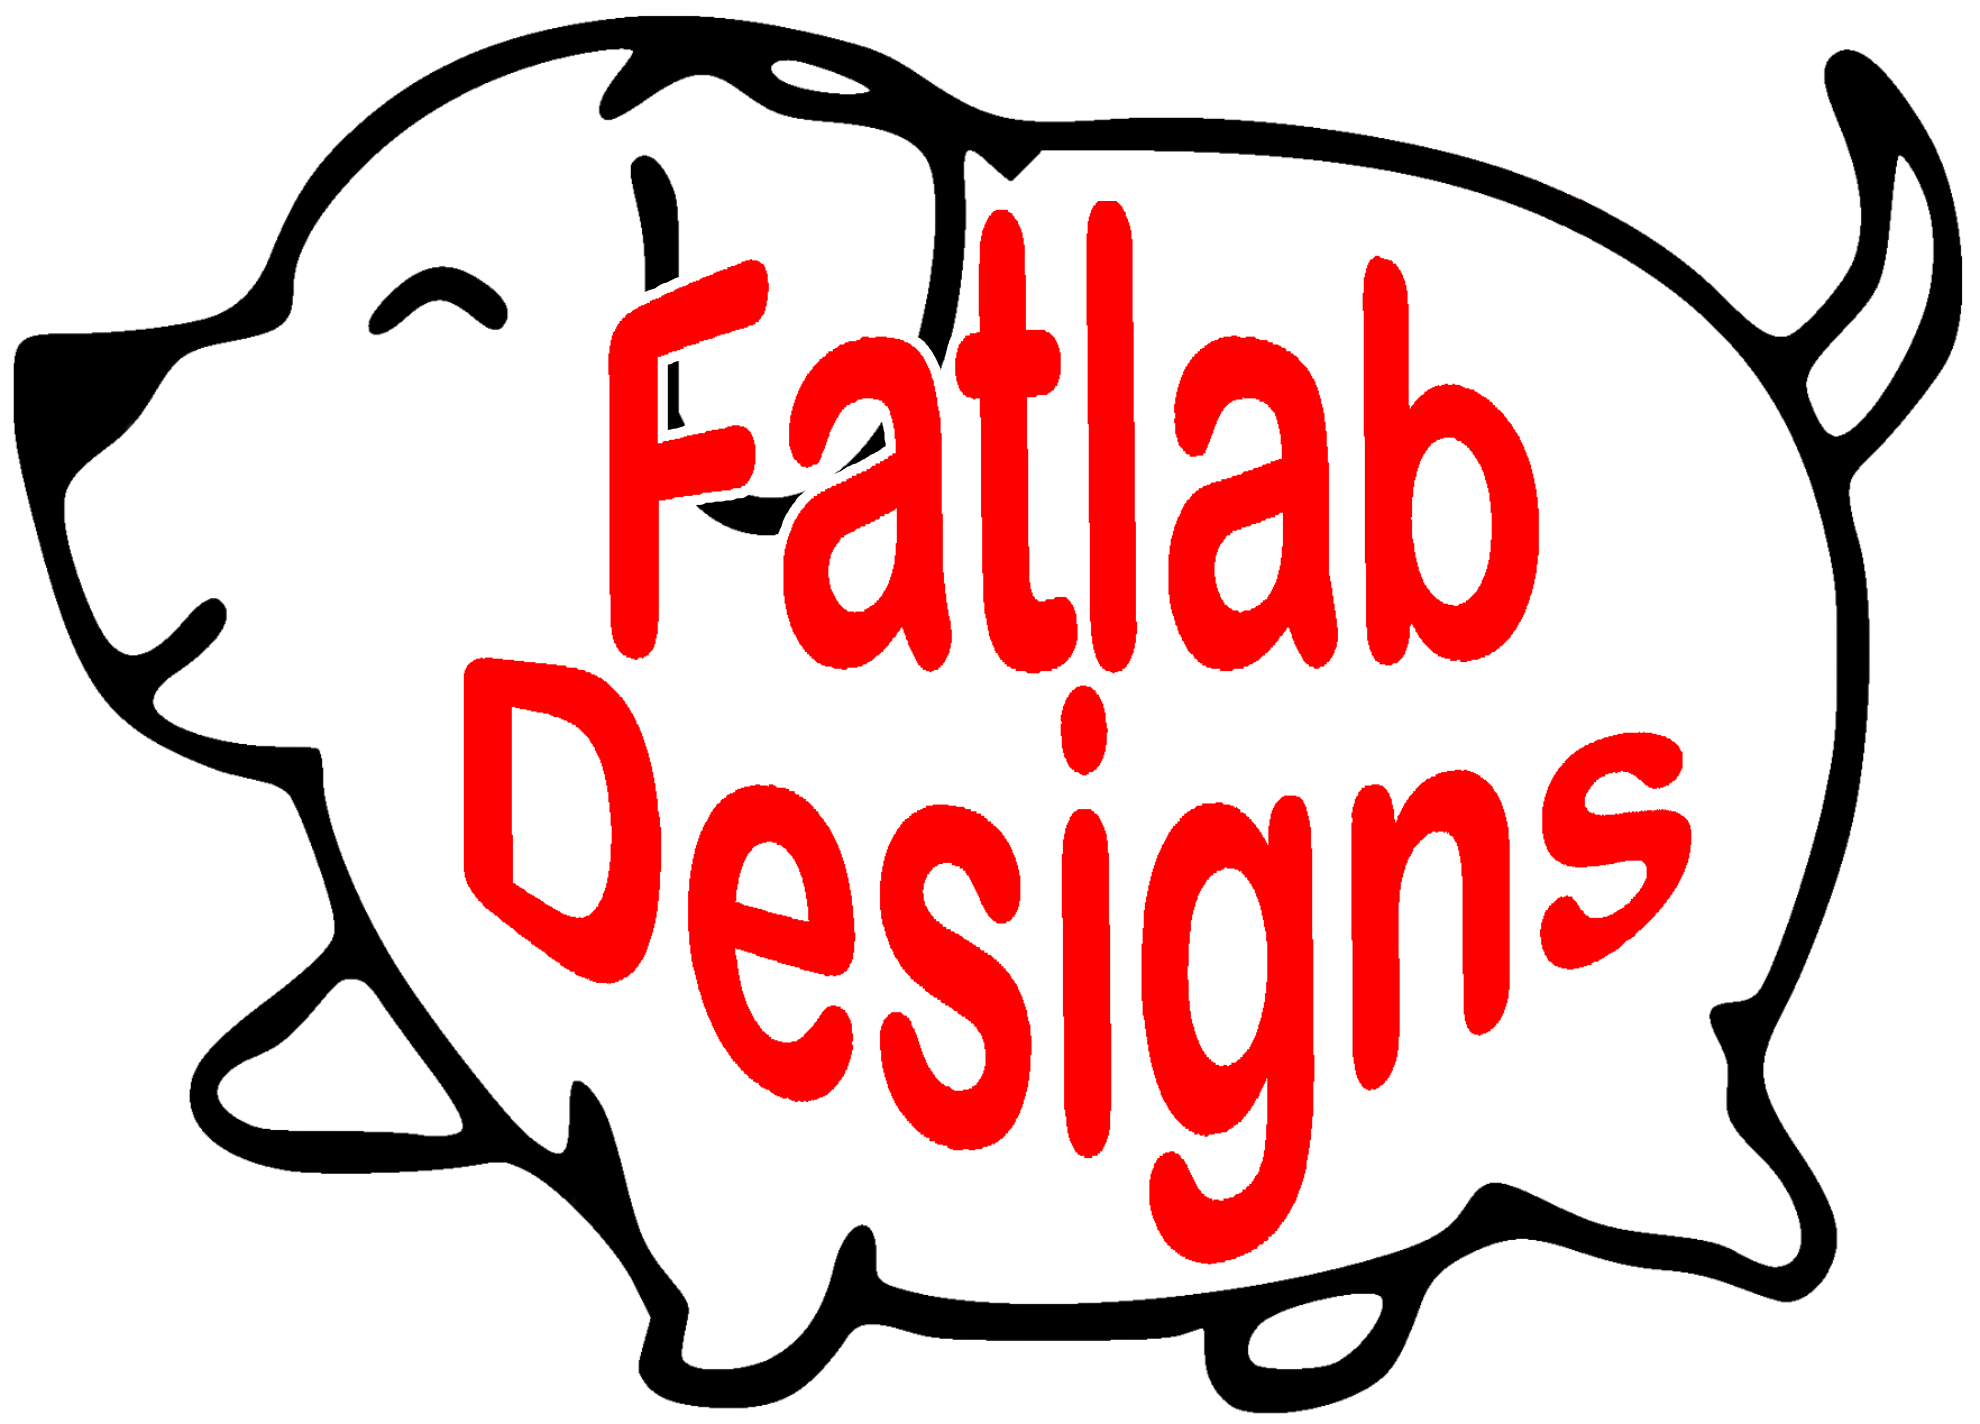 Fatlab Designs Online Store